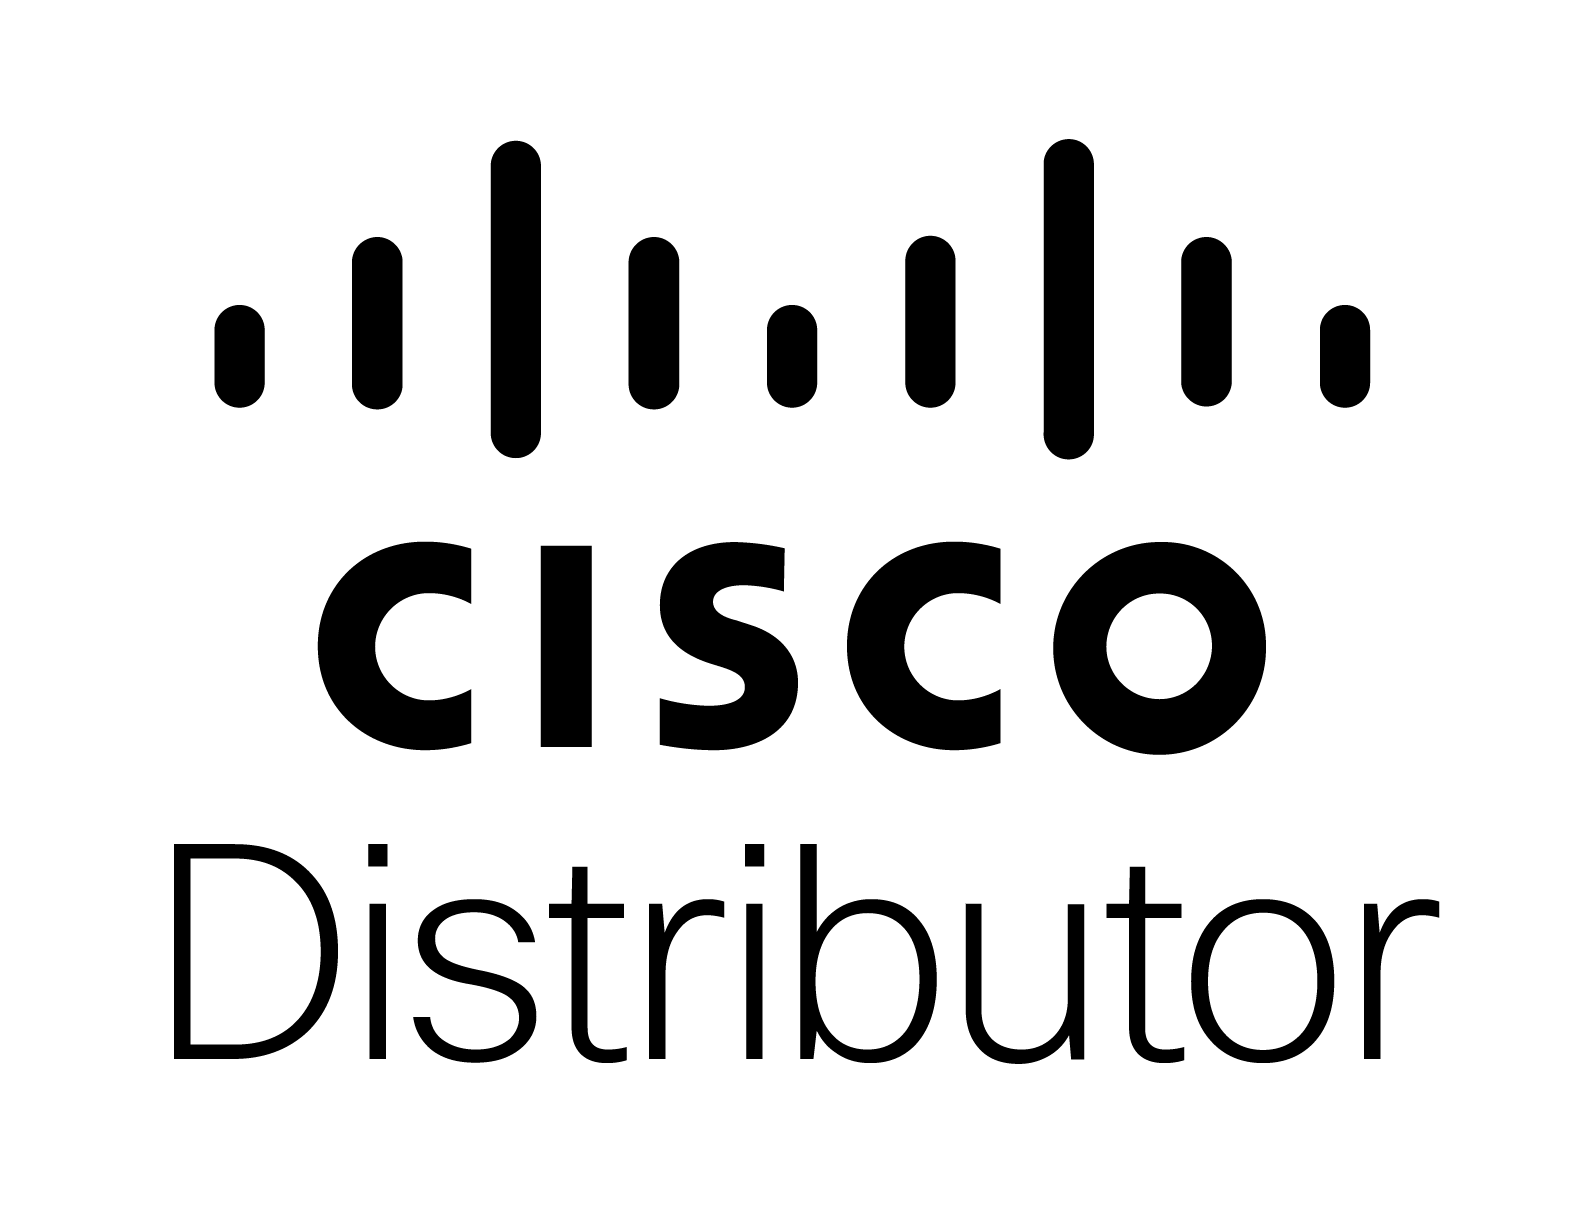 Ciscodistributor logo black